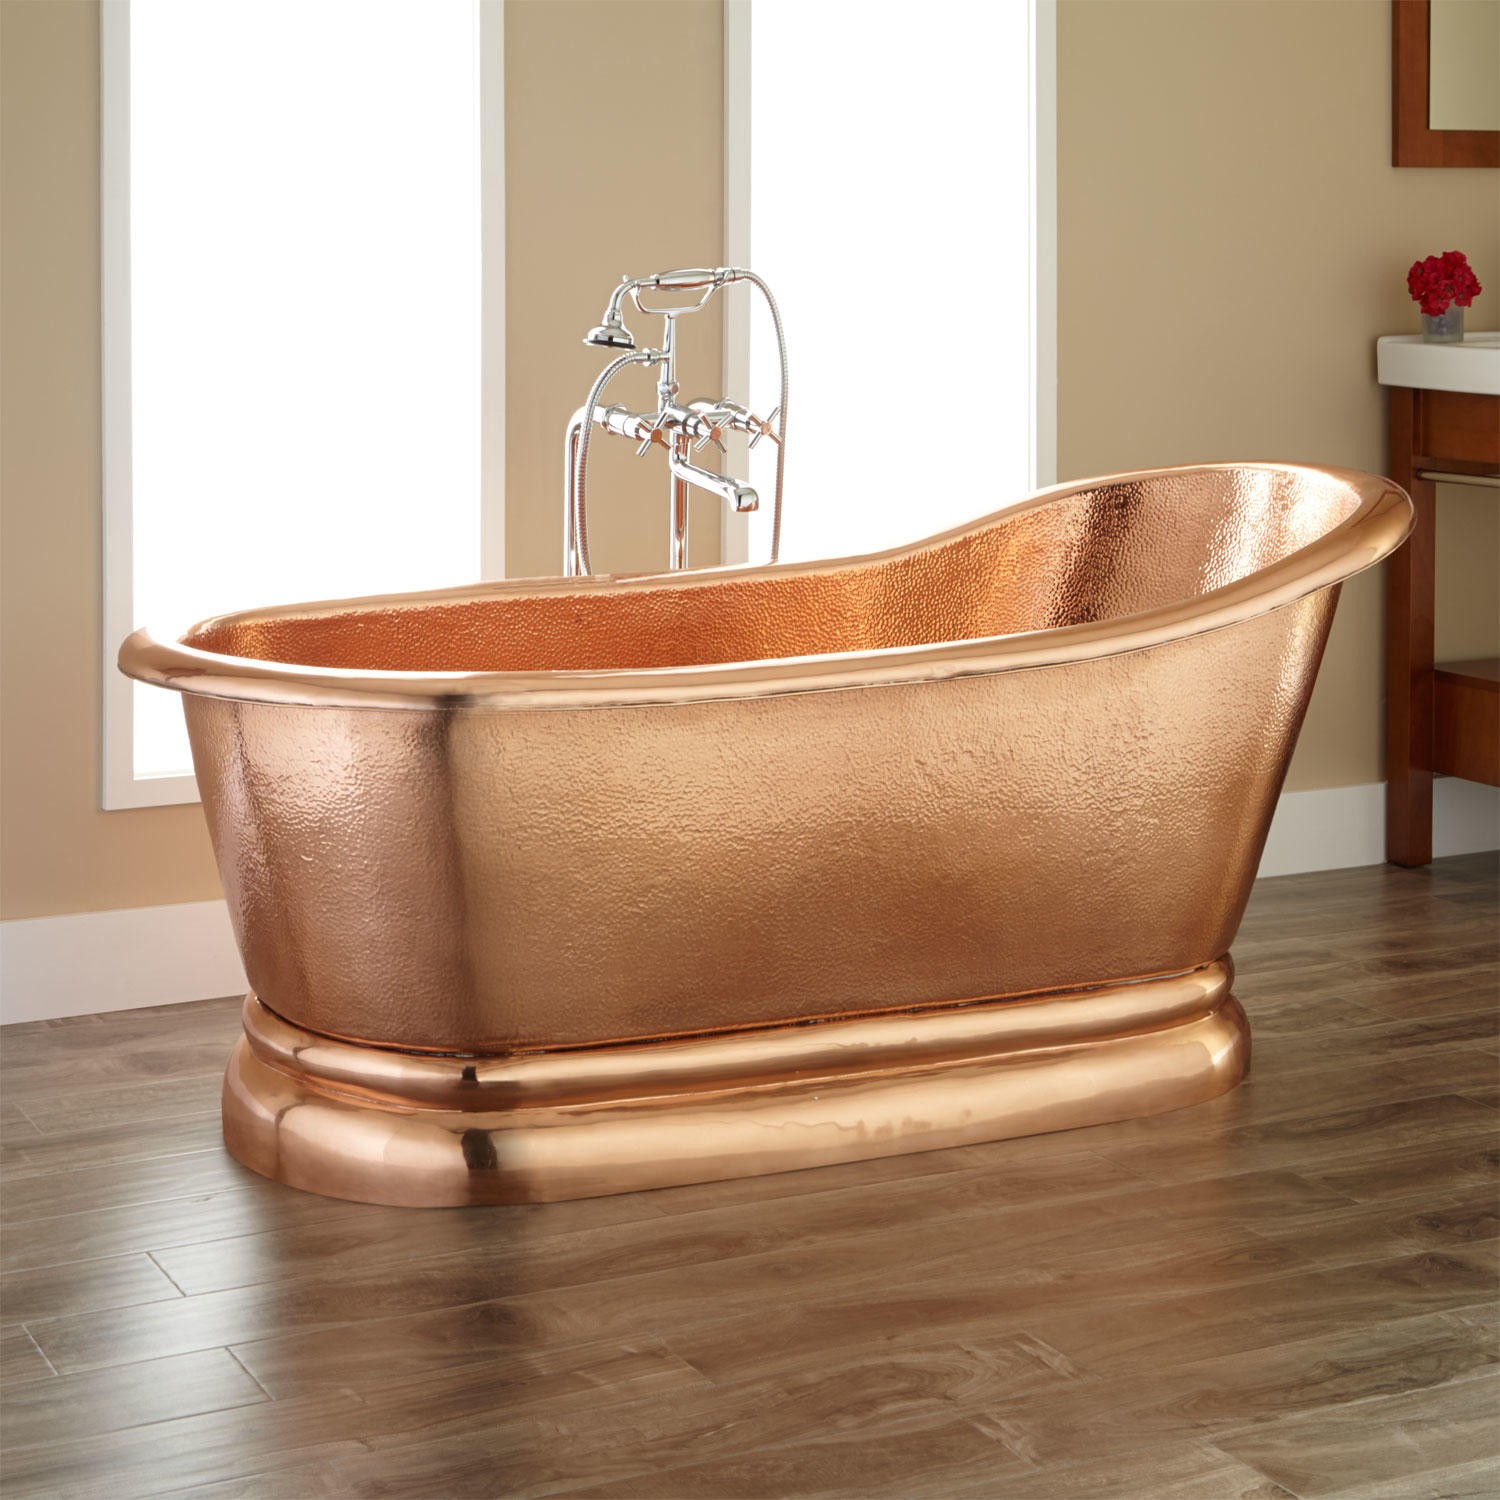 A-luxurious-shiny-copper-bathtub